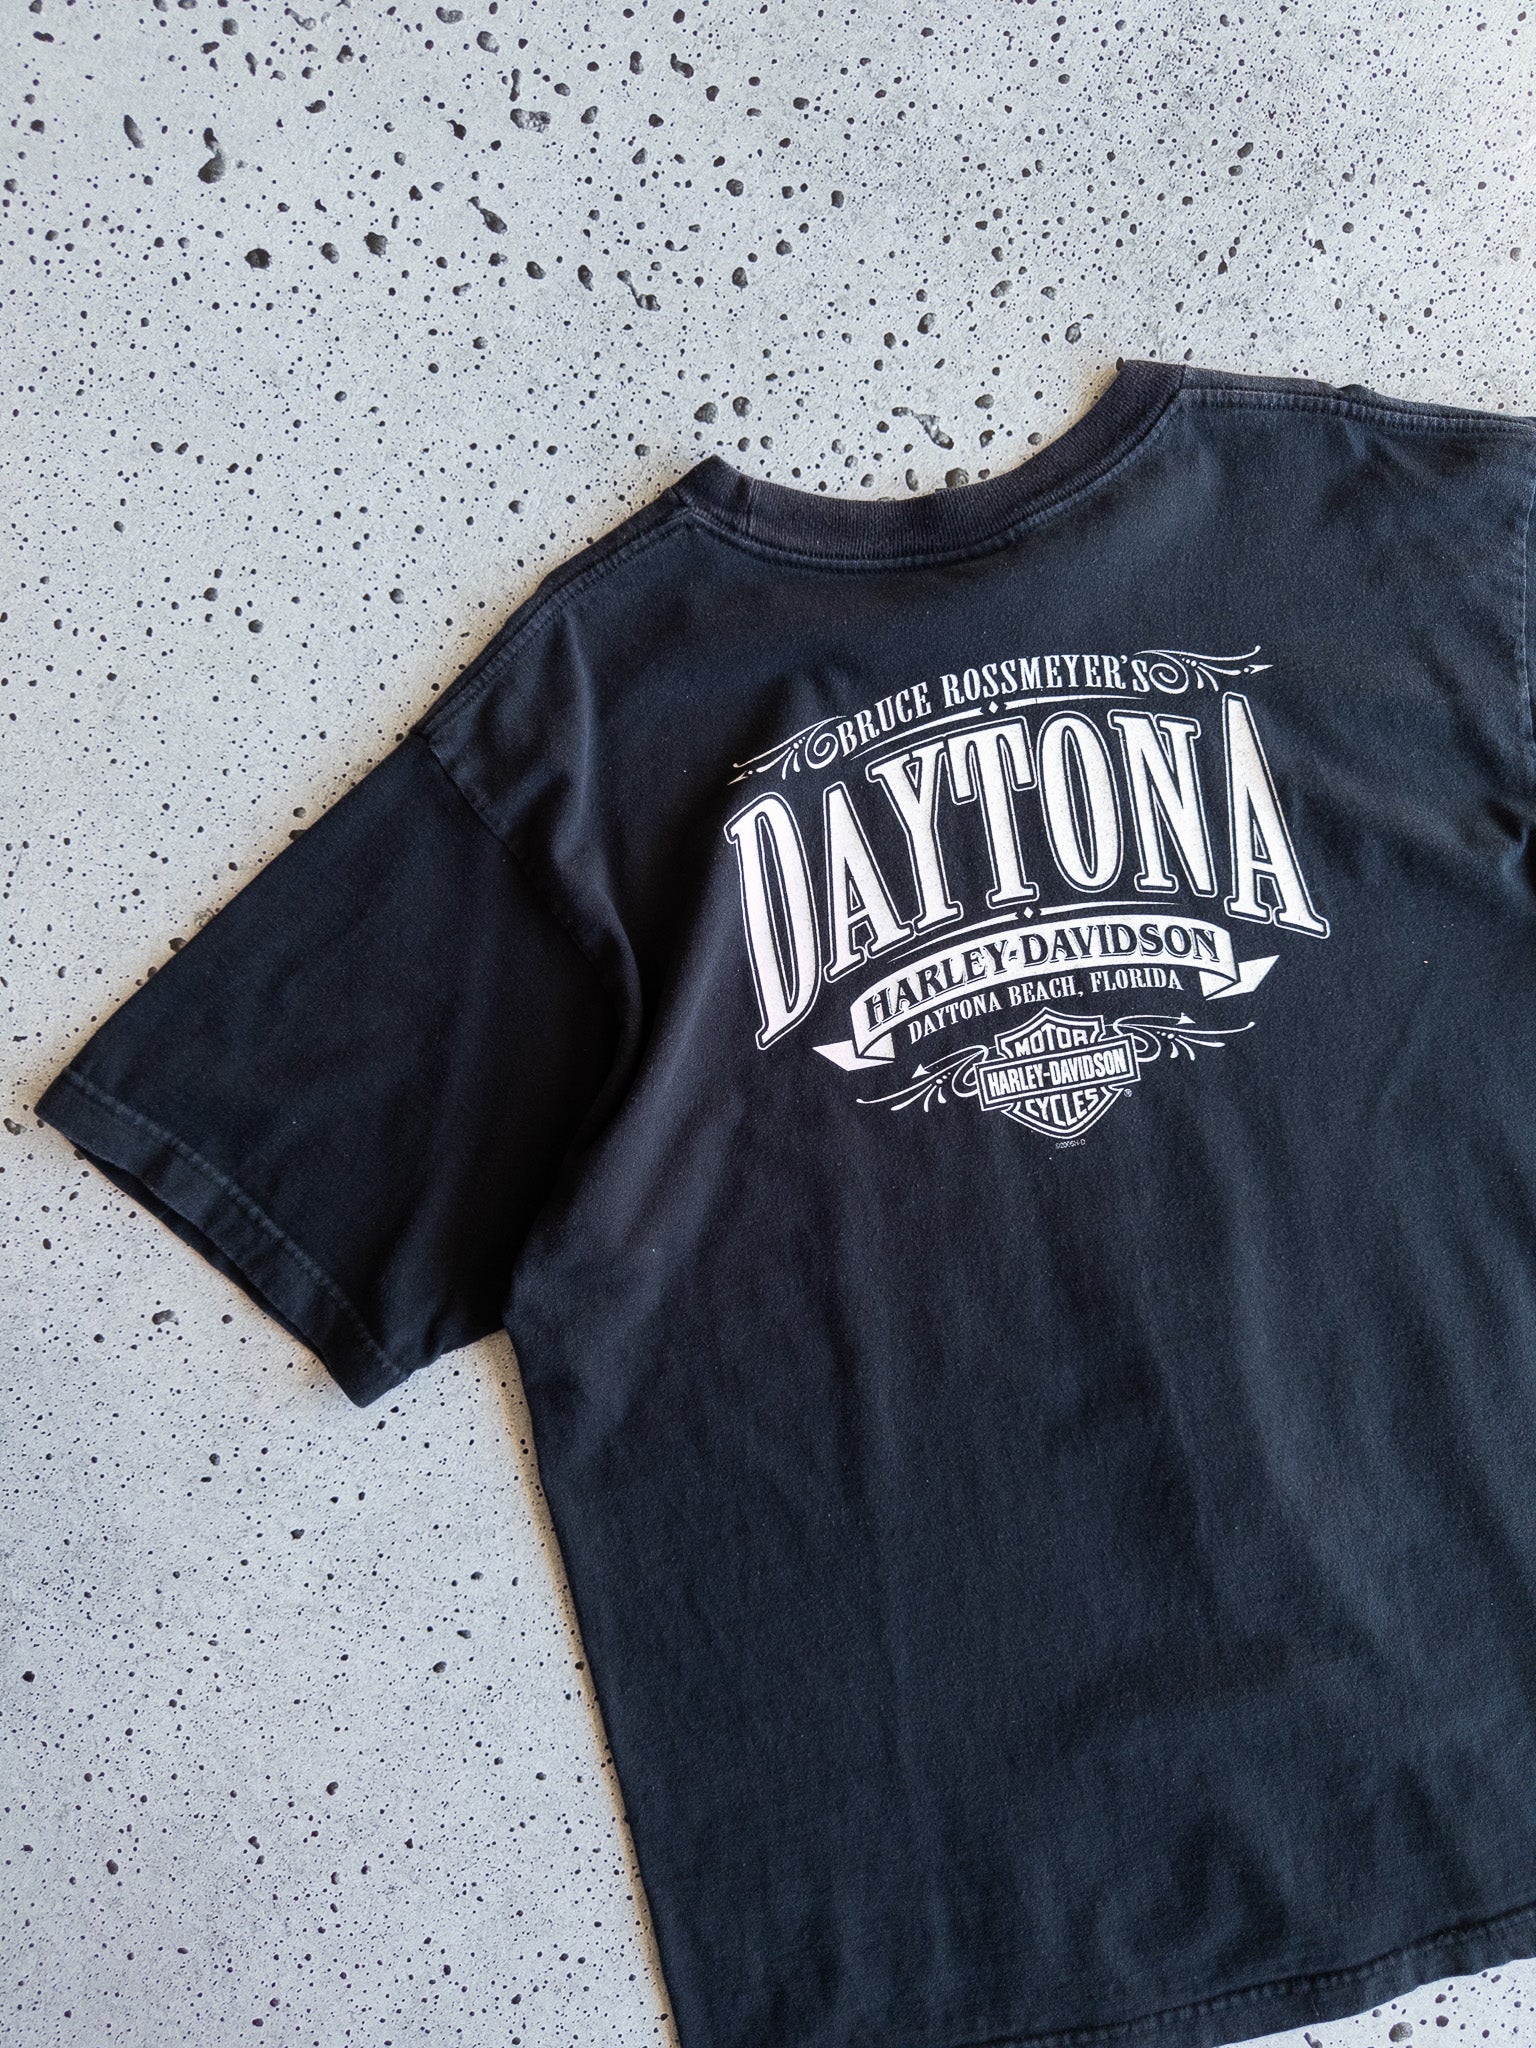 Vintage Harley Davidson Daytona Beach Tee (XL)